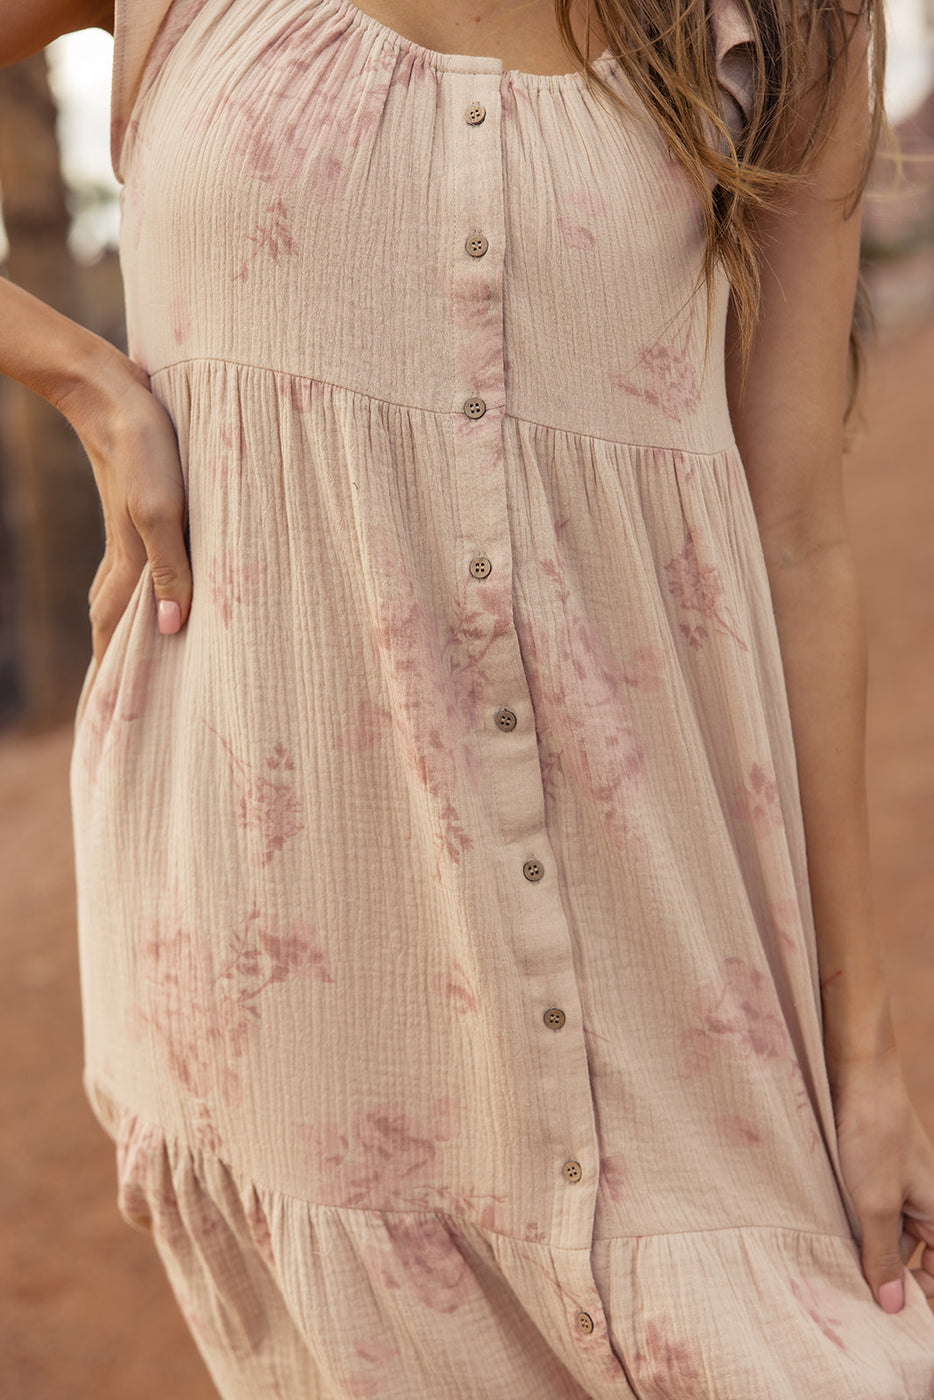 a close up of a woman's dress